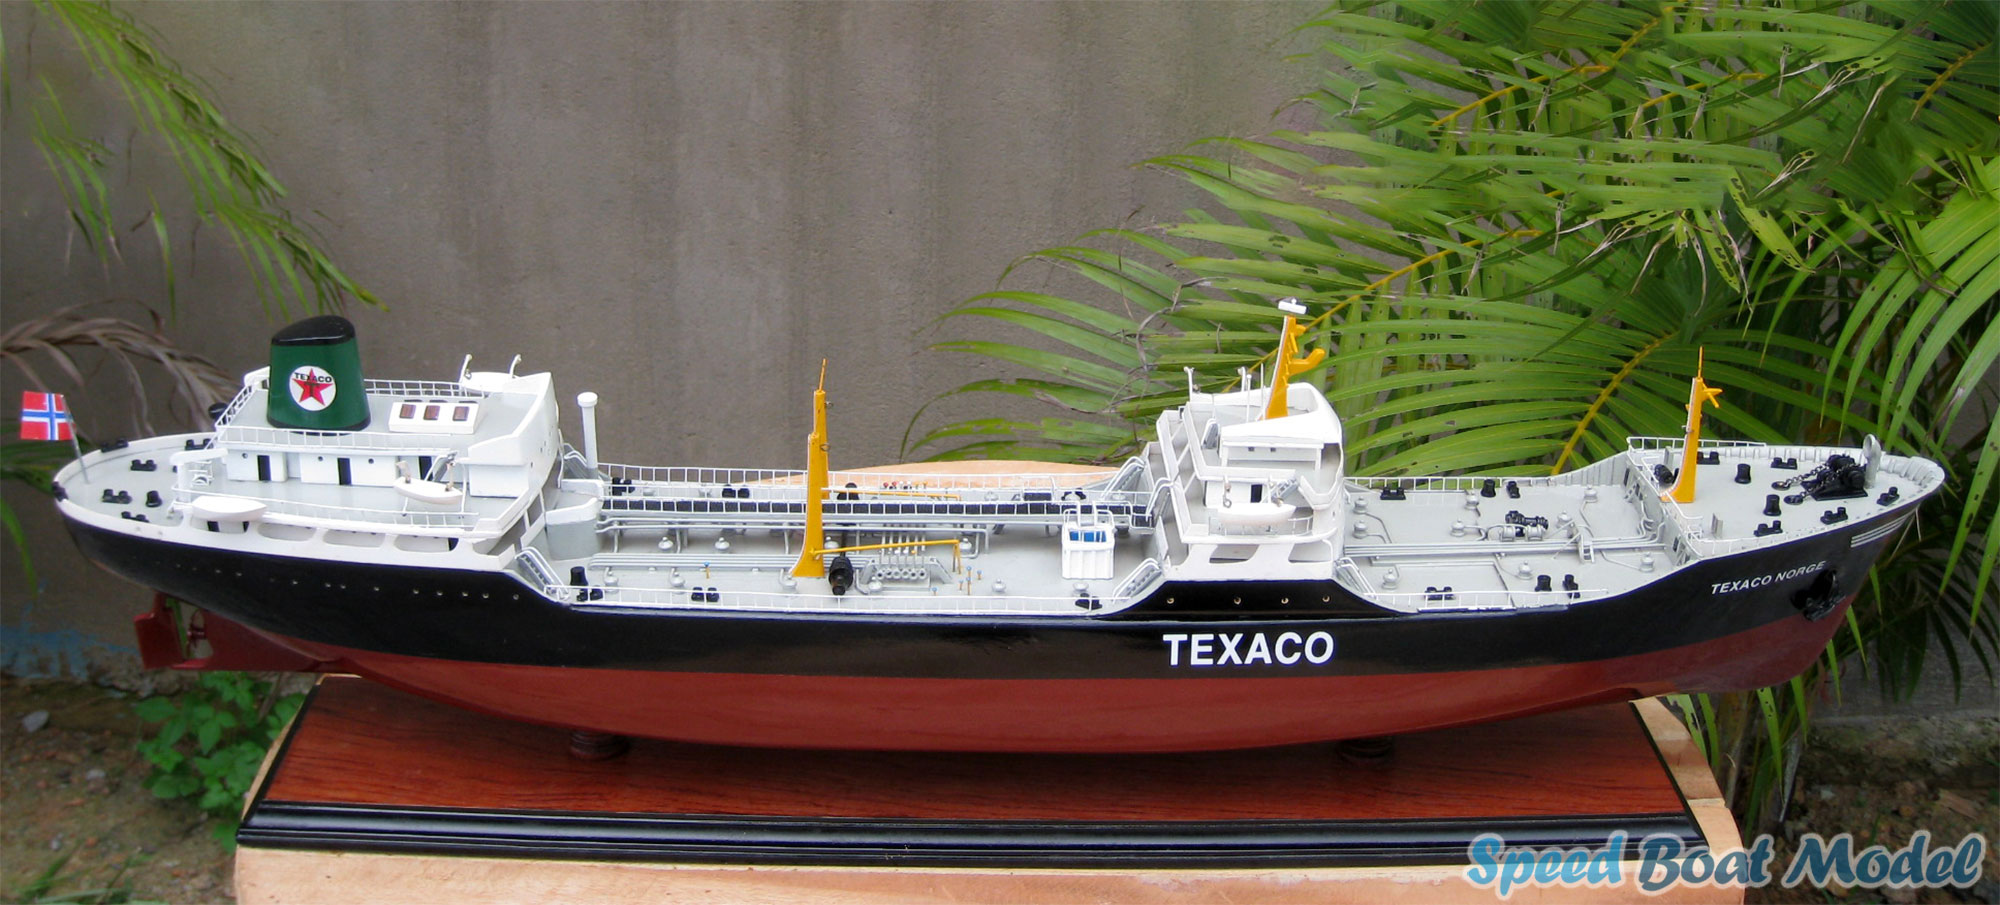 Texaco Norge Commercial Ship Model 31.5